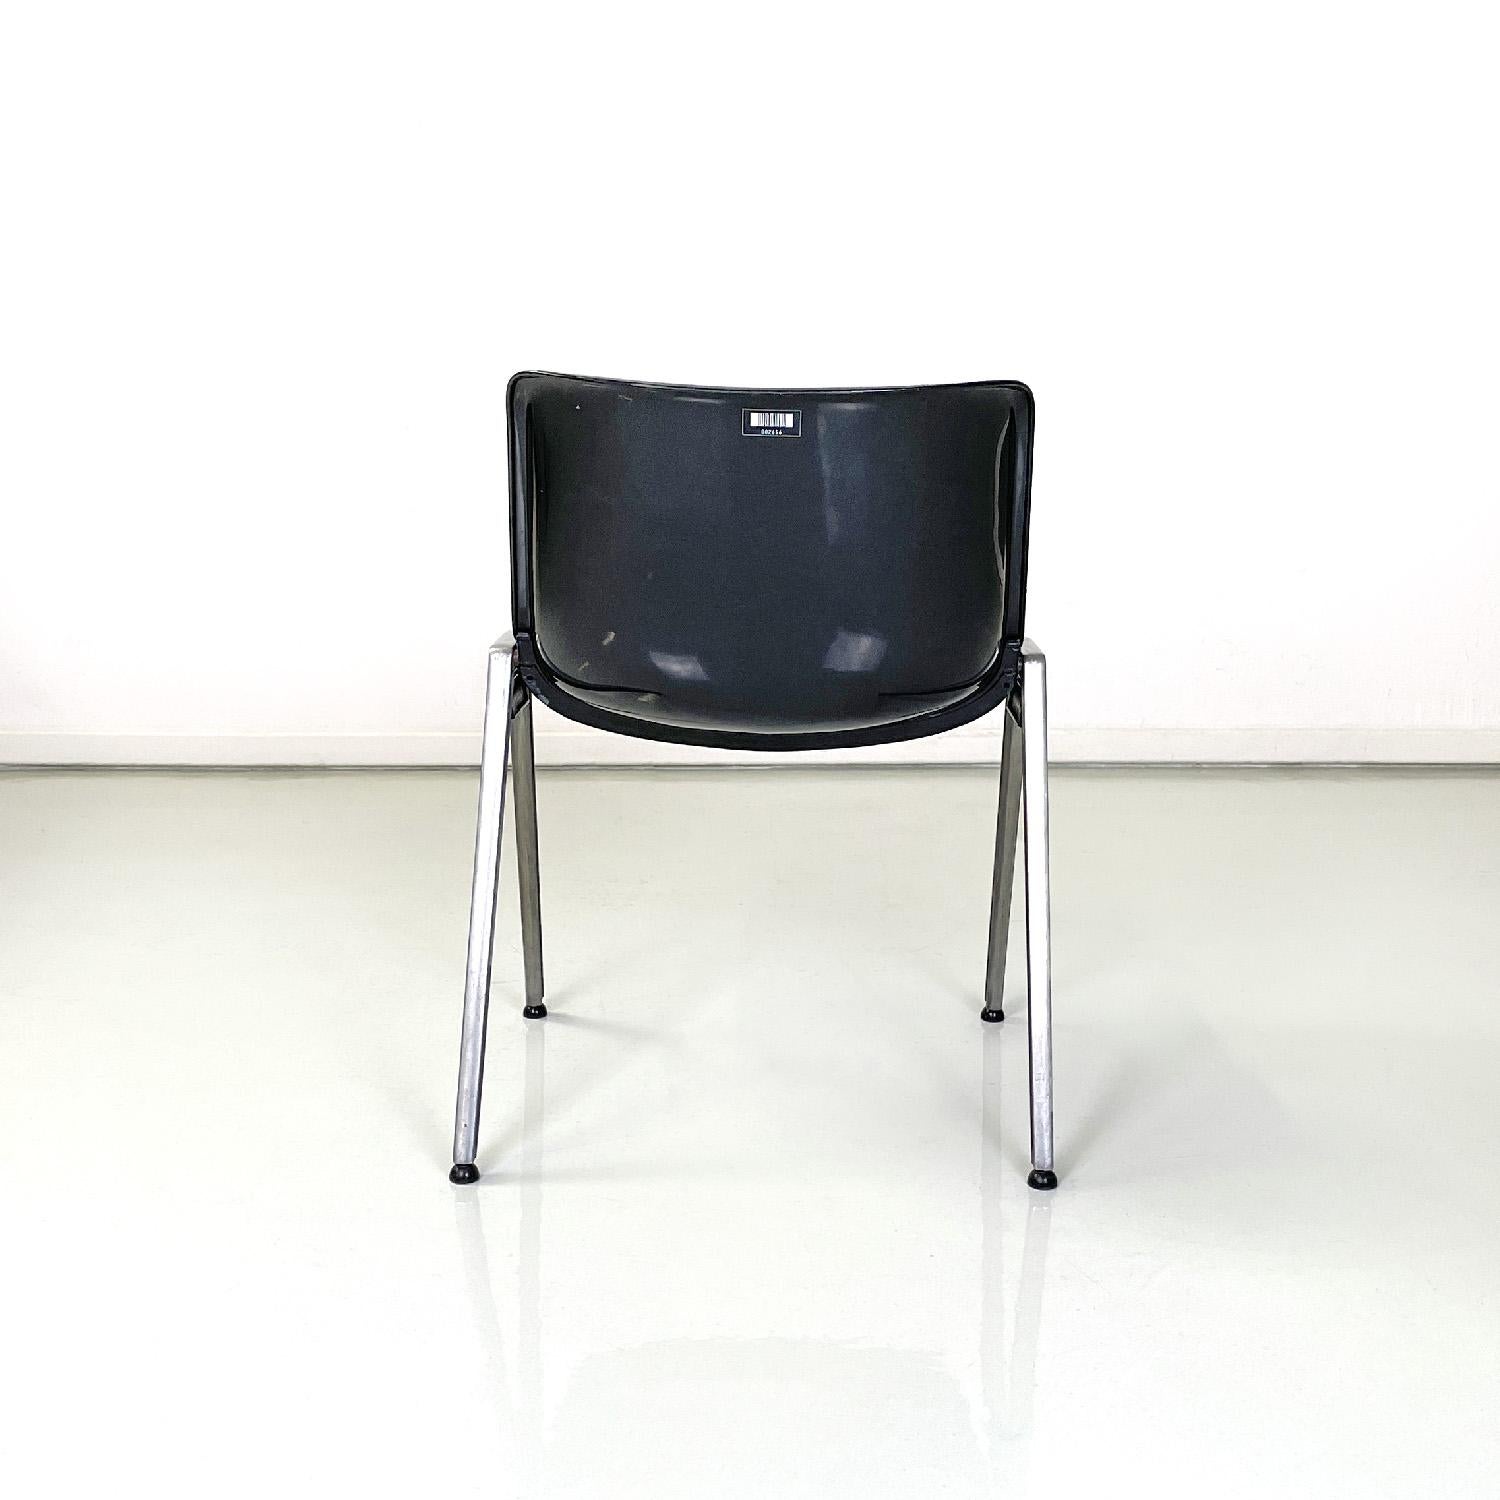 Italian modern black plastic chairs Modus SM 203 by Borsani for Tecno, 1980s For Sale 1